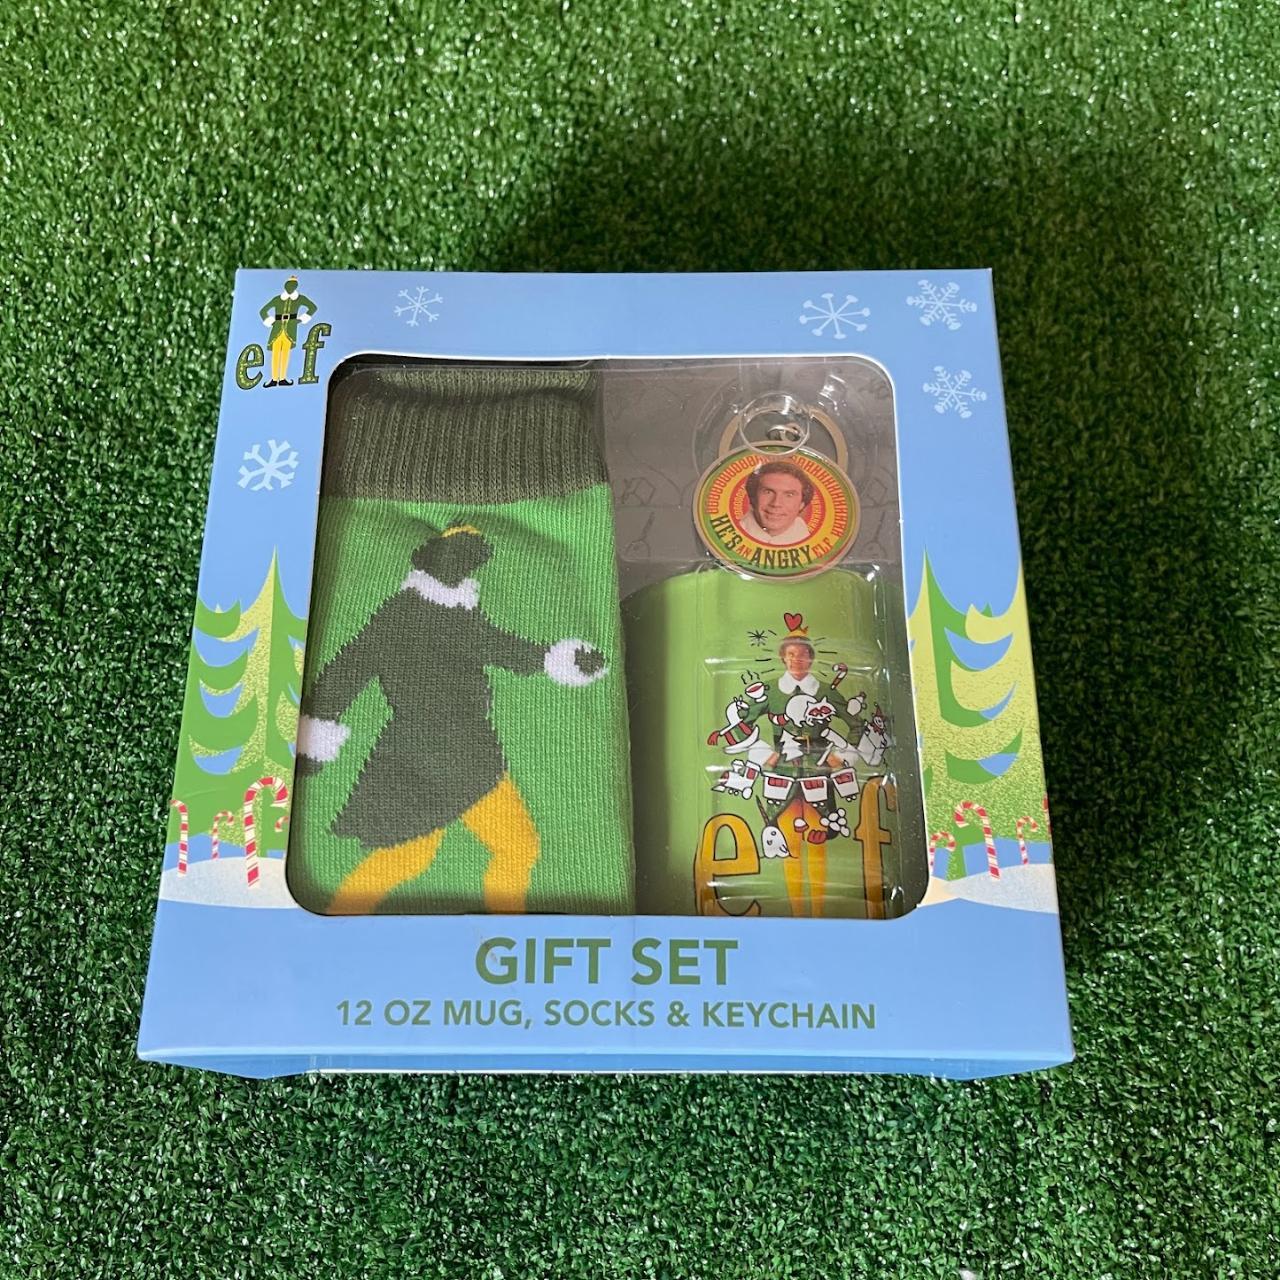 CultureFly Buddy The Elf Mug, Socks & Keychain Gift Set